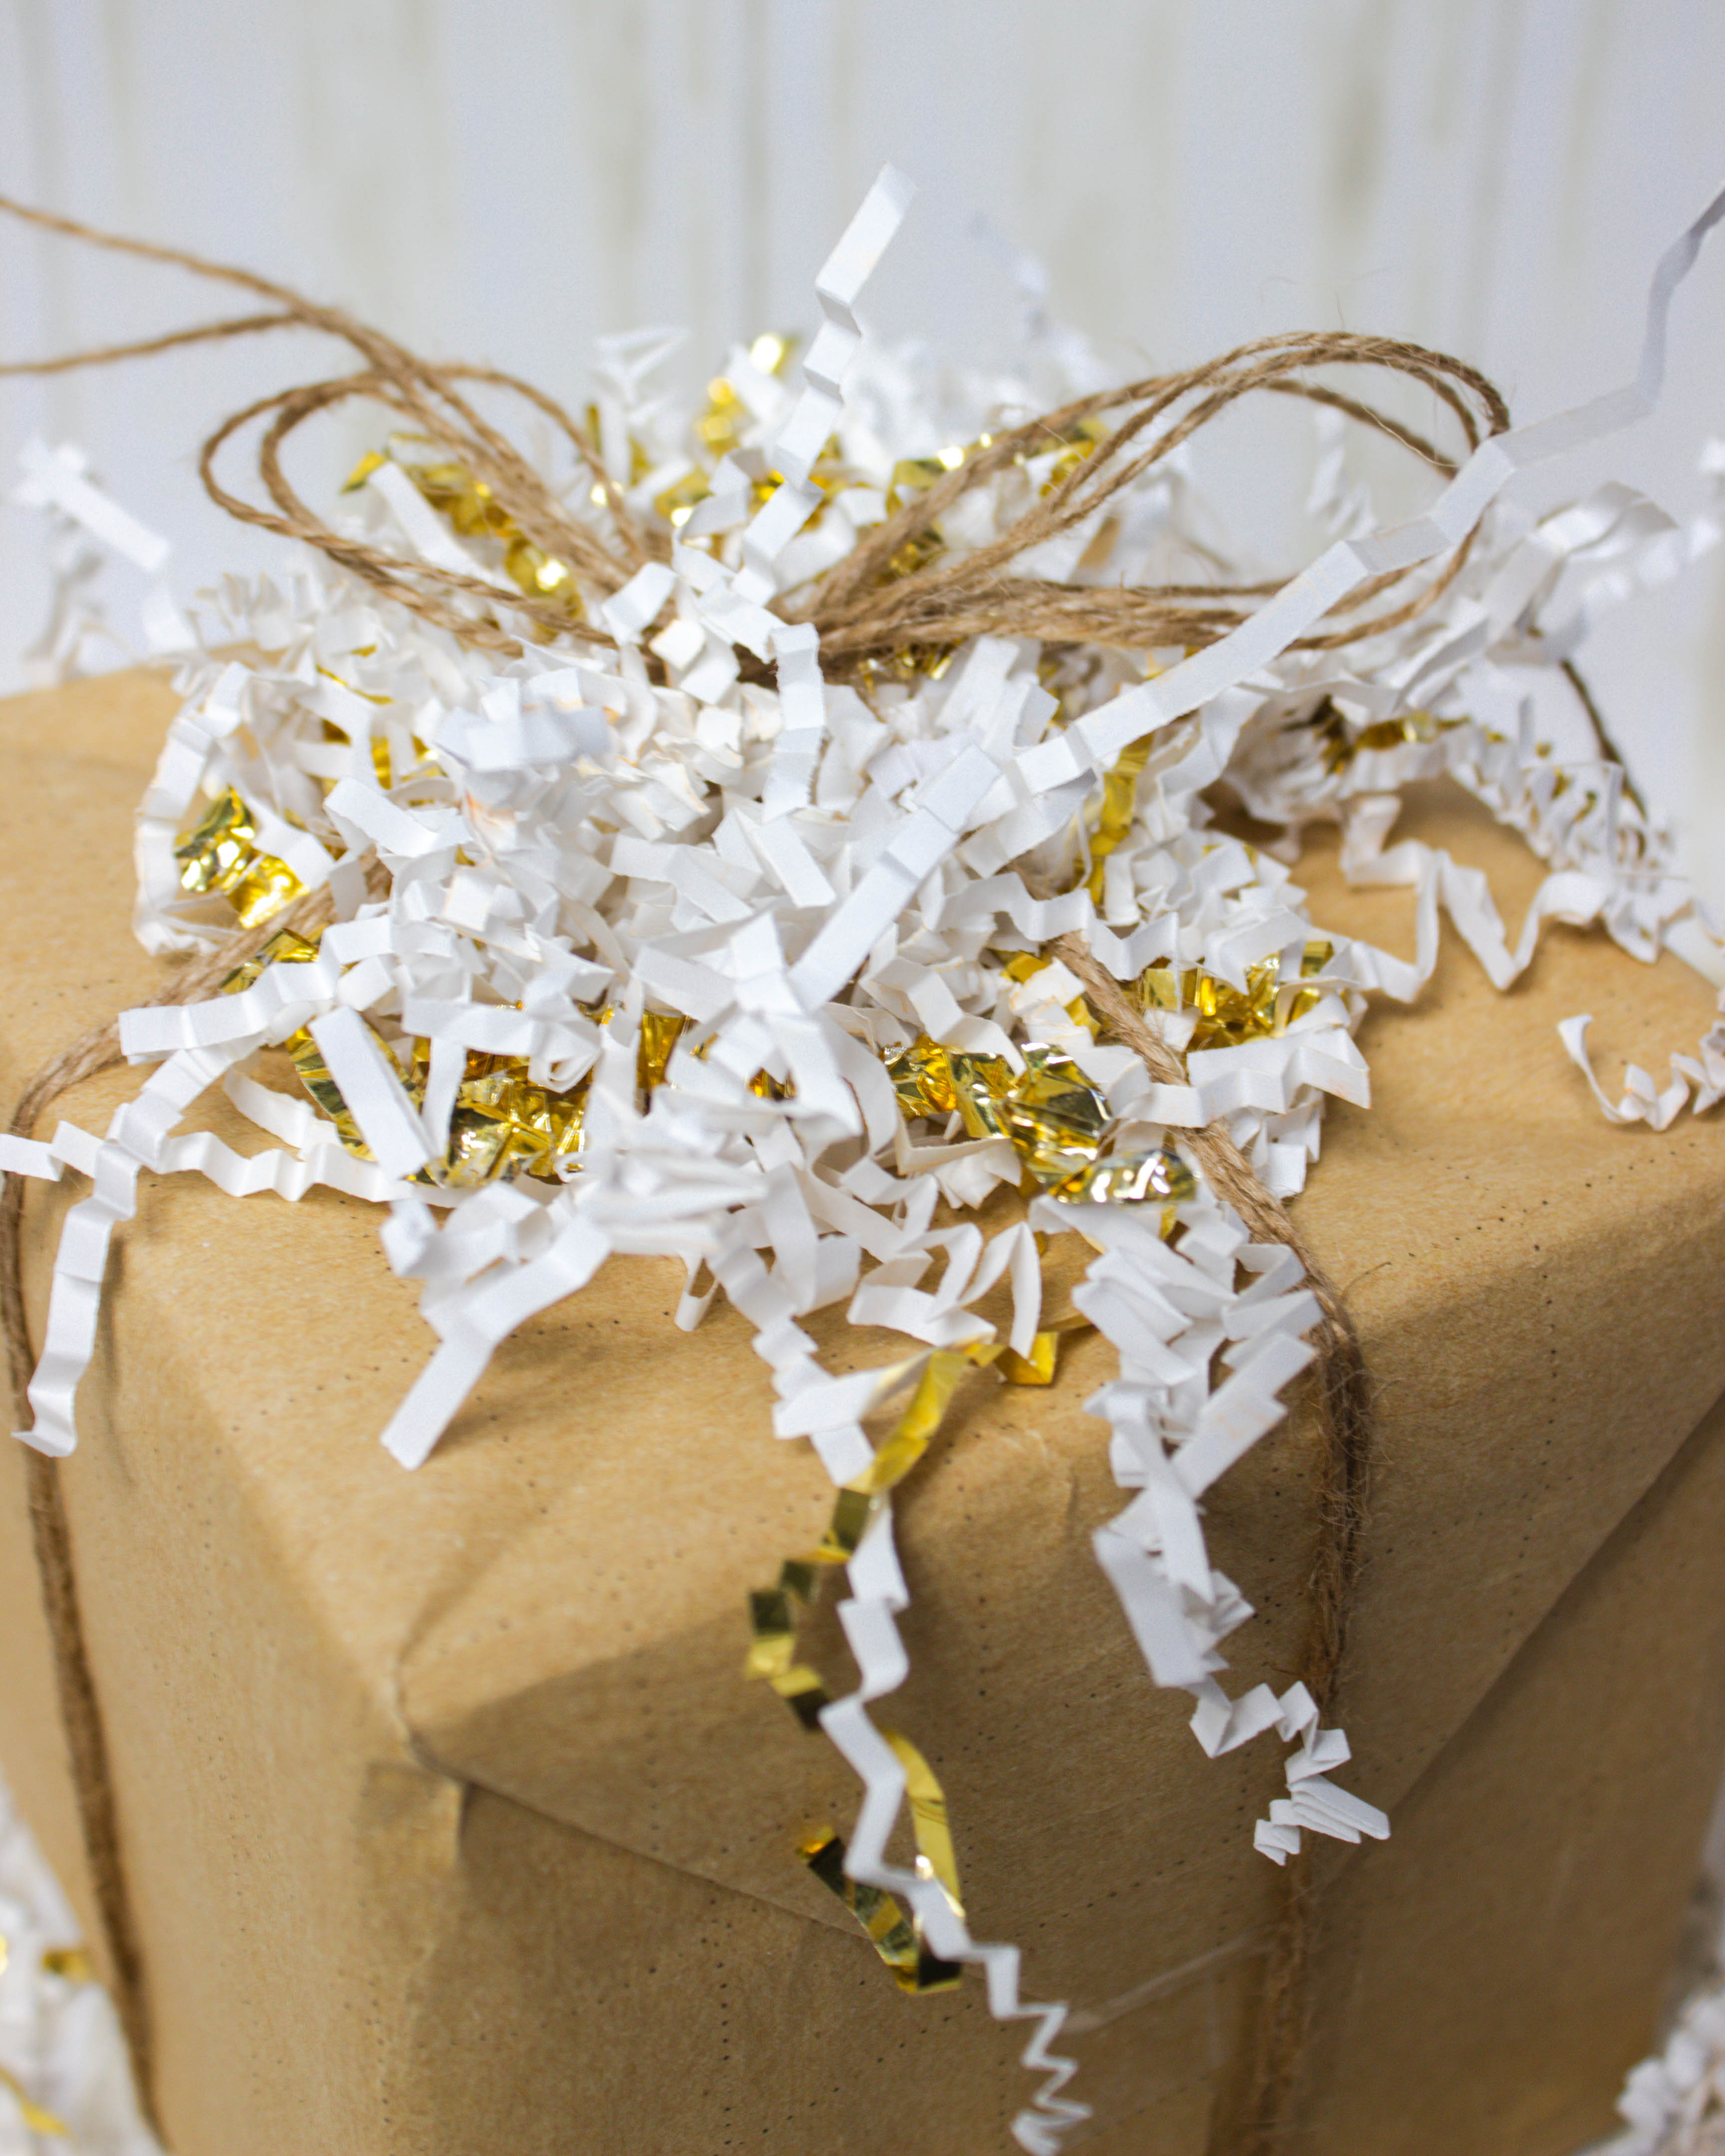 Crinkle Cut Paper Shred Filler (2 LB) for Gift Wrapping & Basket Filling - White & Gold